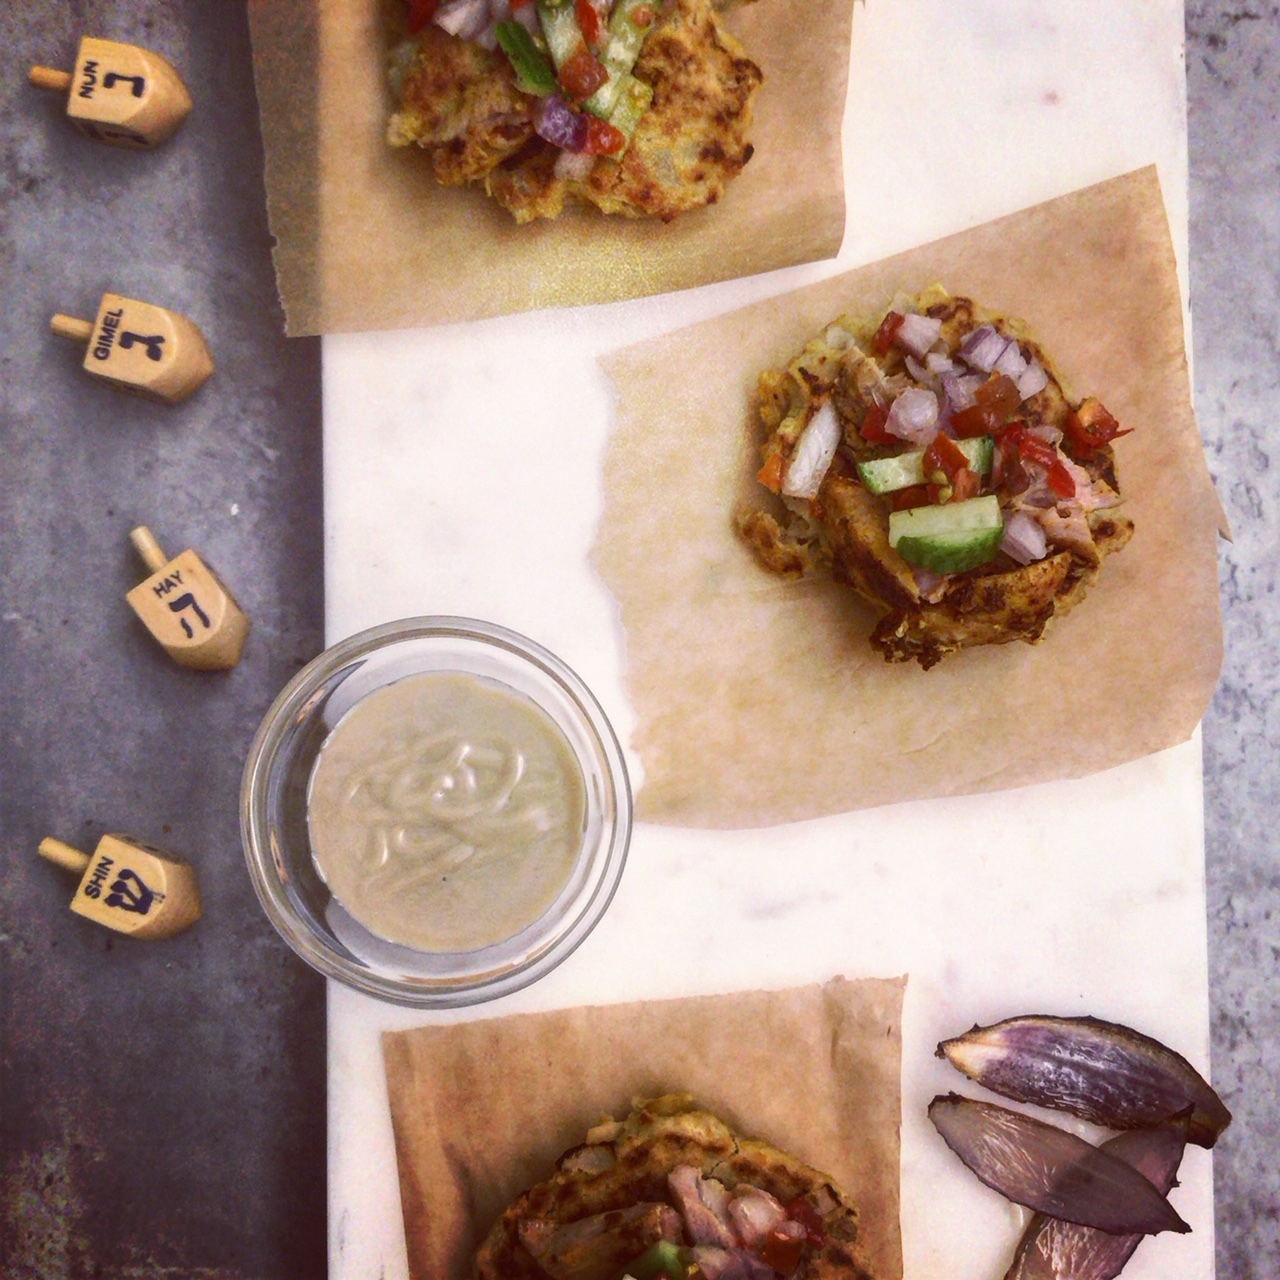 Chickpea “Latkes” Topped With Shawarma Chicken By Vanessa Haberman | @platesandpetals